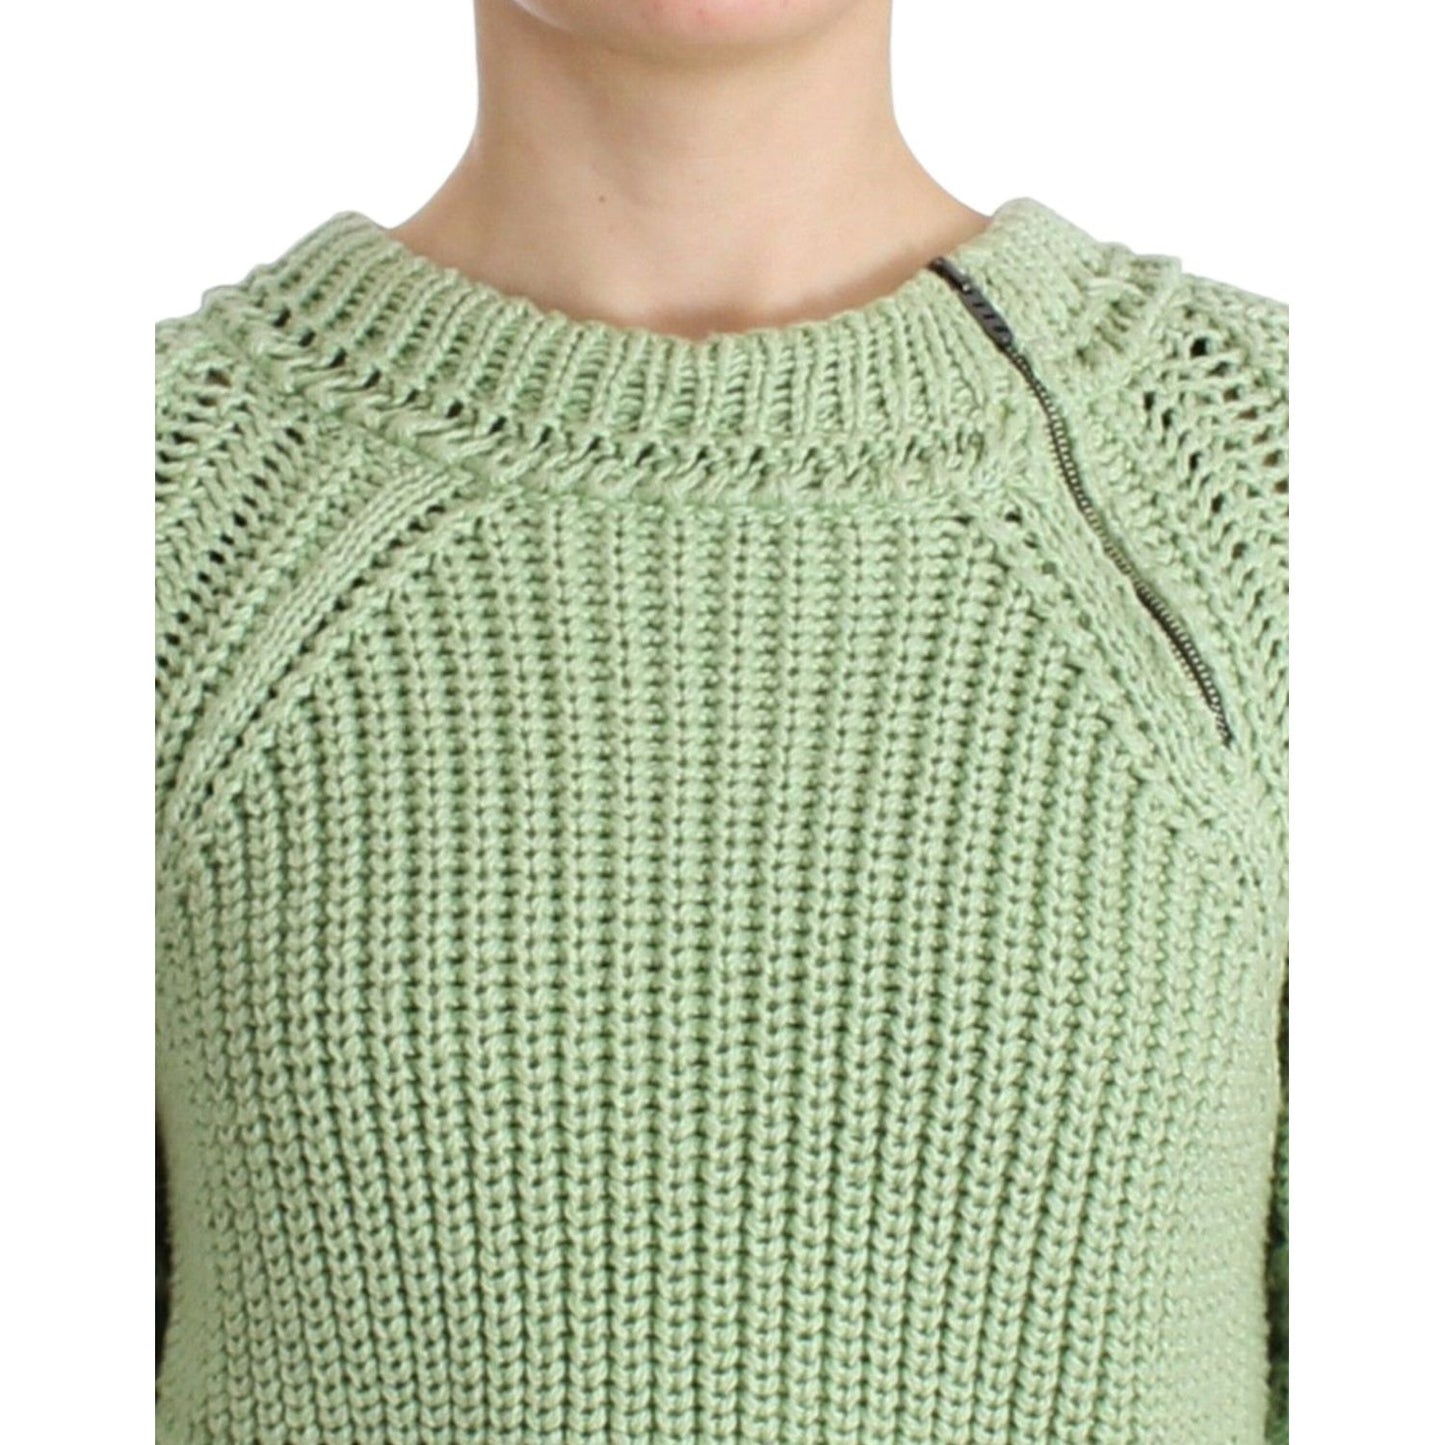 Ermanno Scervino Chic Green Cropped Cotton Sweater green-cropped-knit-sweater-knitted-jumper